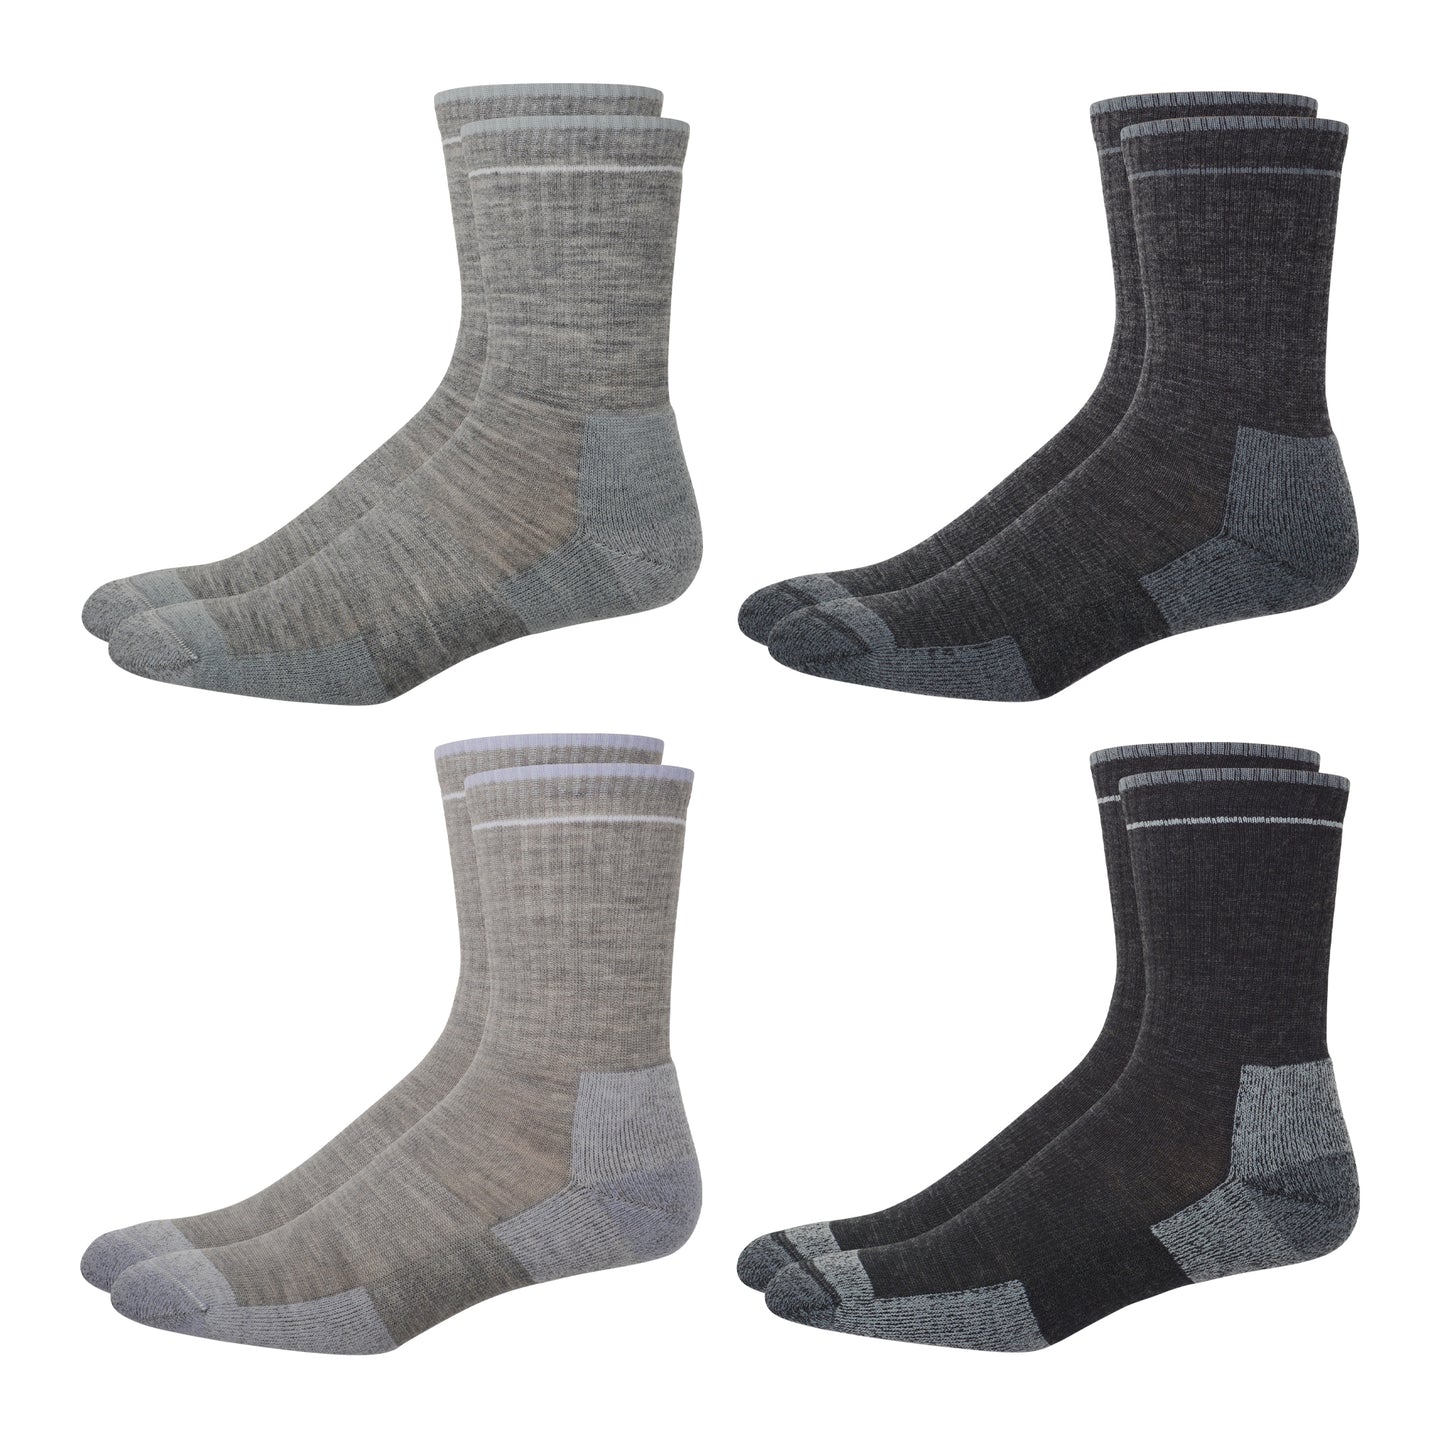 Four pairs of grey and black merino wool socks. 